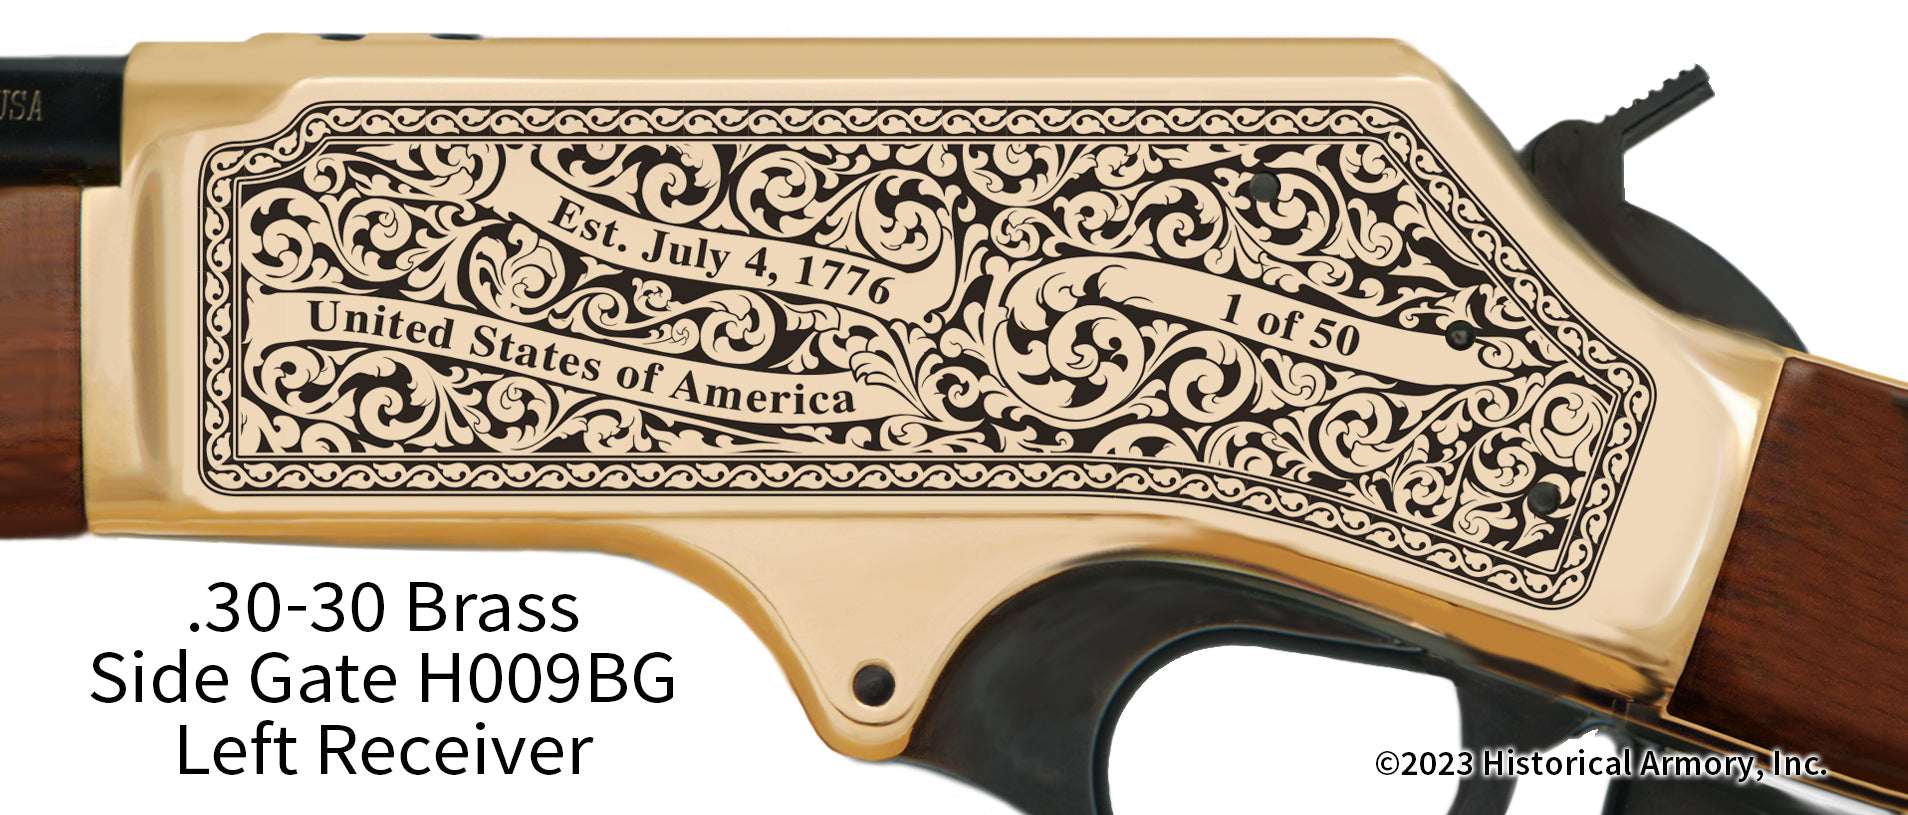 Rush County Kansas Engraved Henry .30-30 Brass Side Gate Rifle